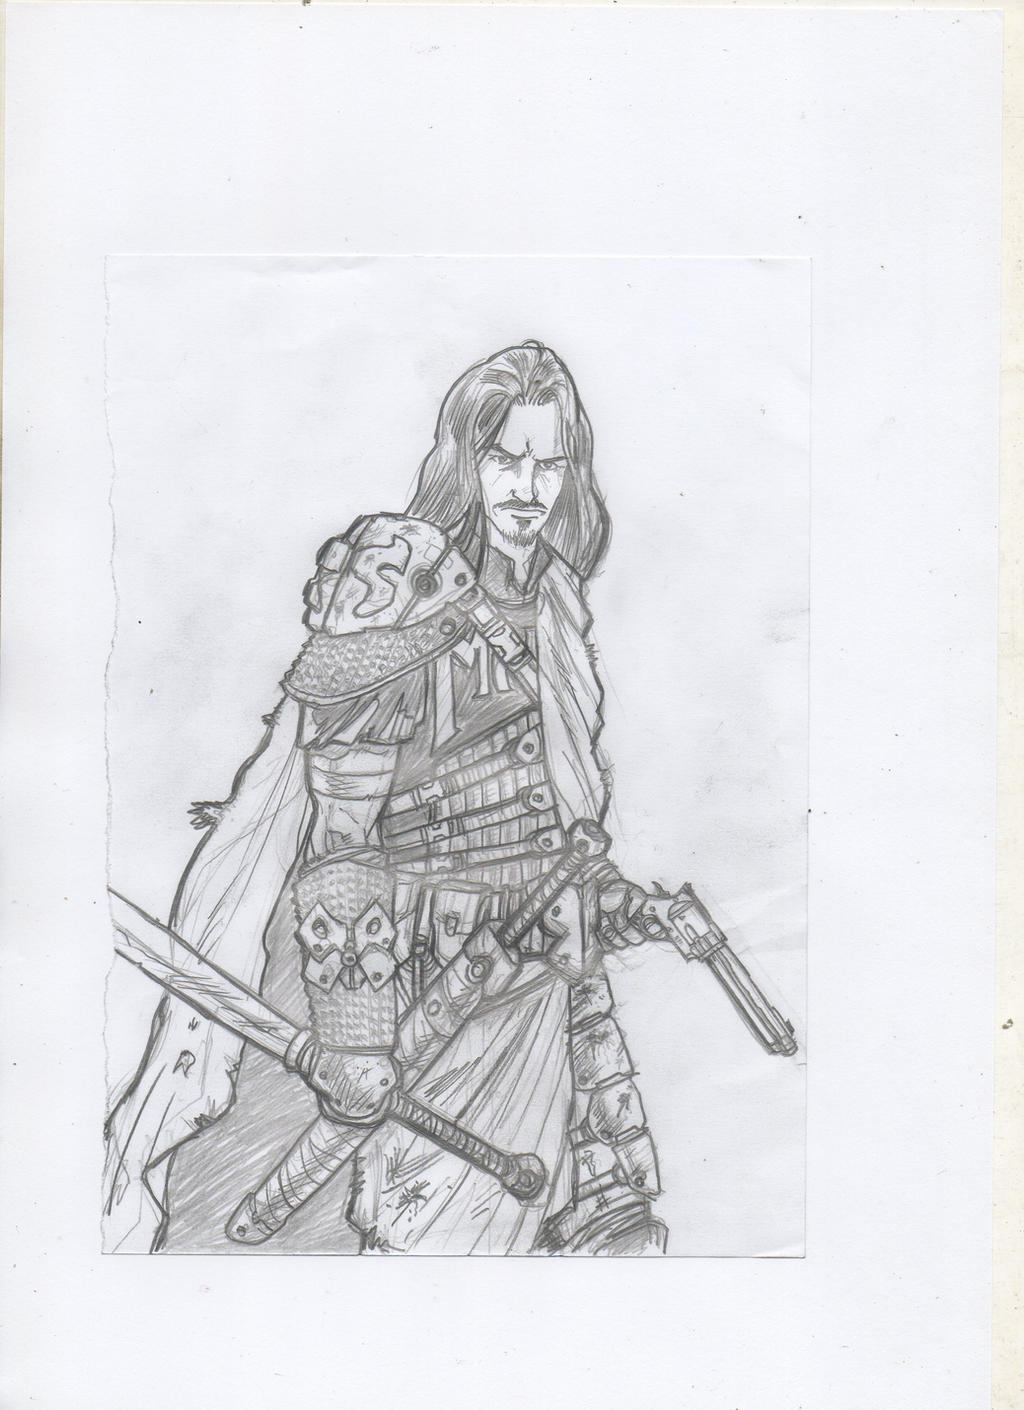 Post apocalyptic warrior sketch